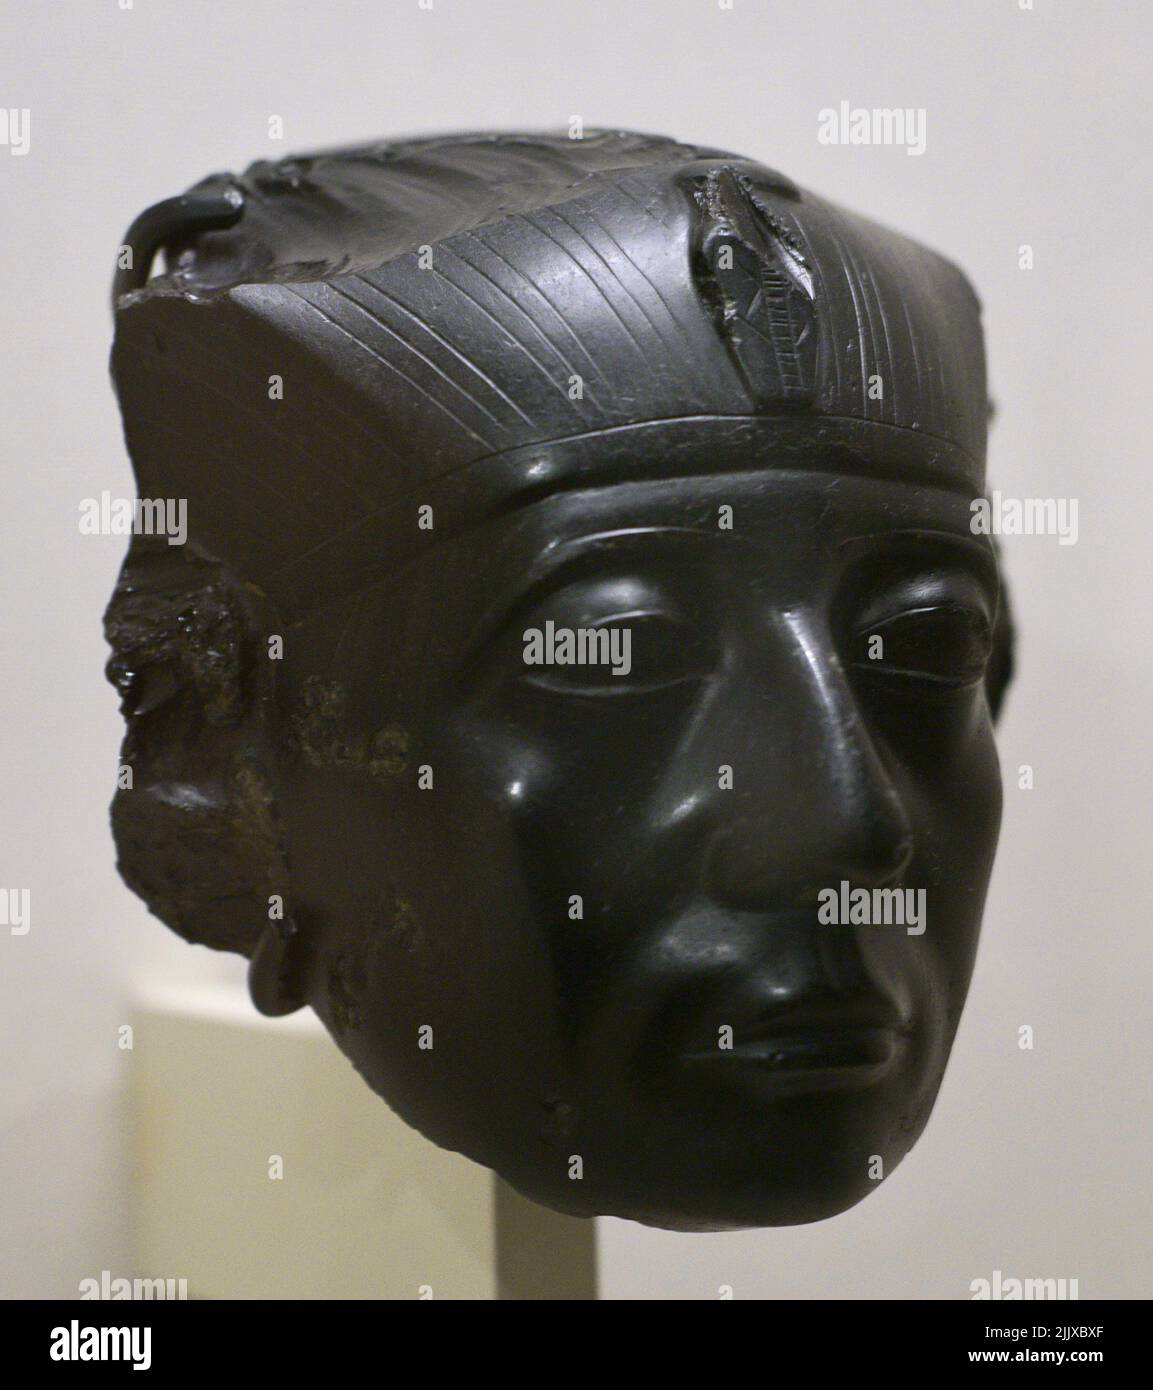 Egypt. Head of King Senwosret III. Middle Kingdom. 12th dynasty, ca. 1860 BC. Obsidian. Calouste Gulbenkian Museum. Lisbon, Portugal. Stock Photo